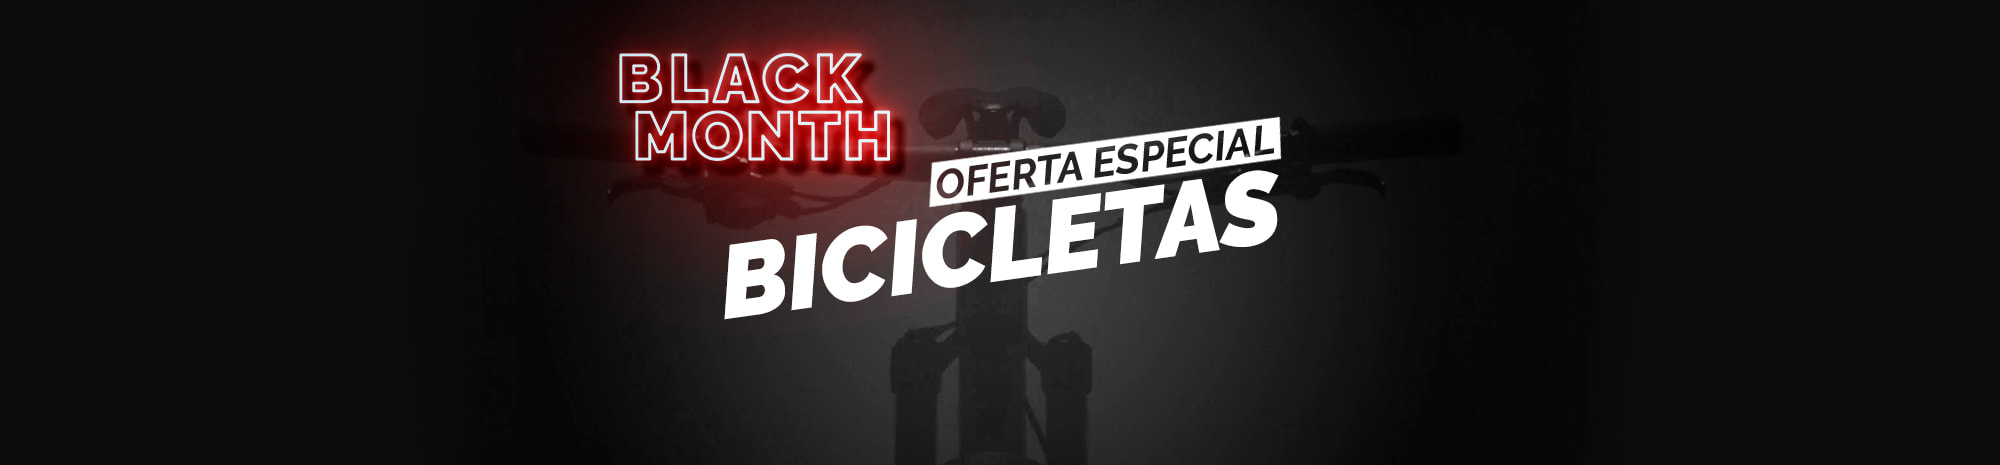 Oferta especial de bicicletas Black Friday